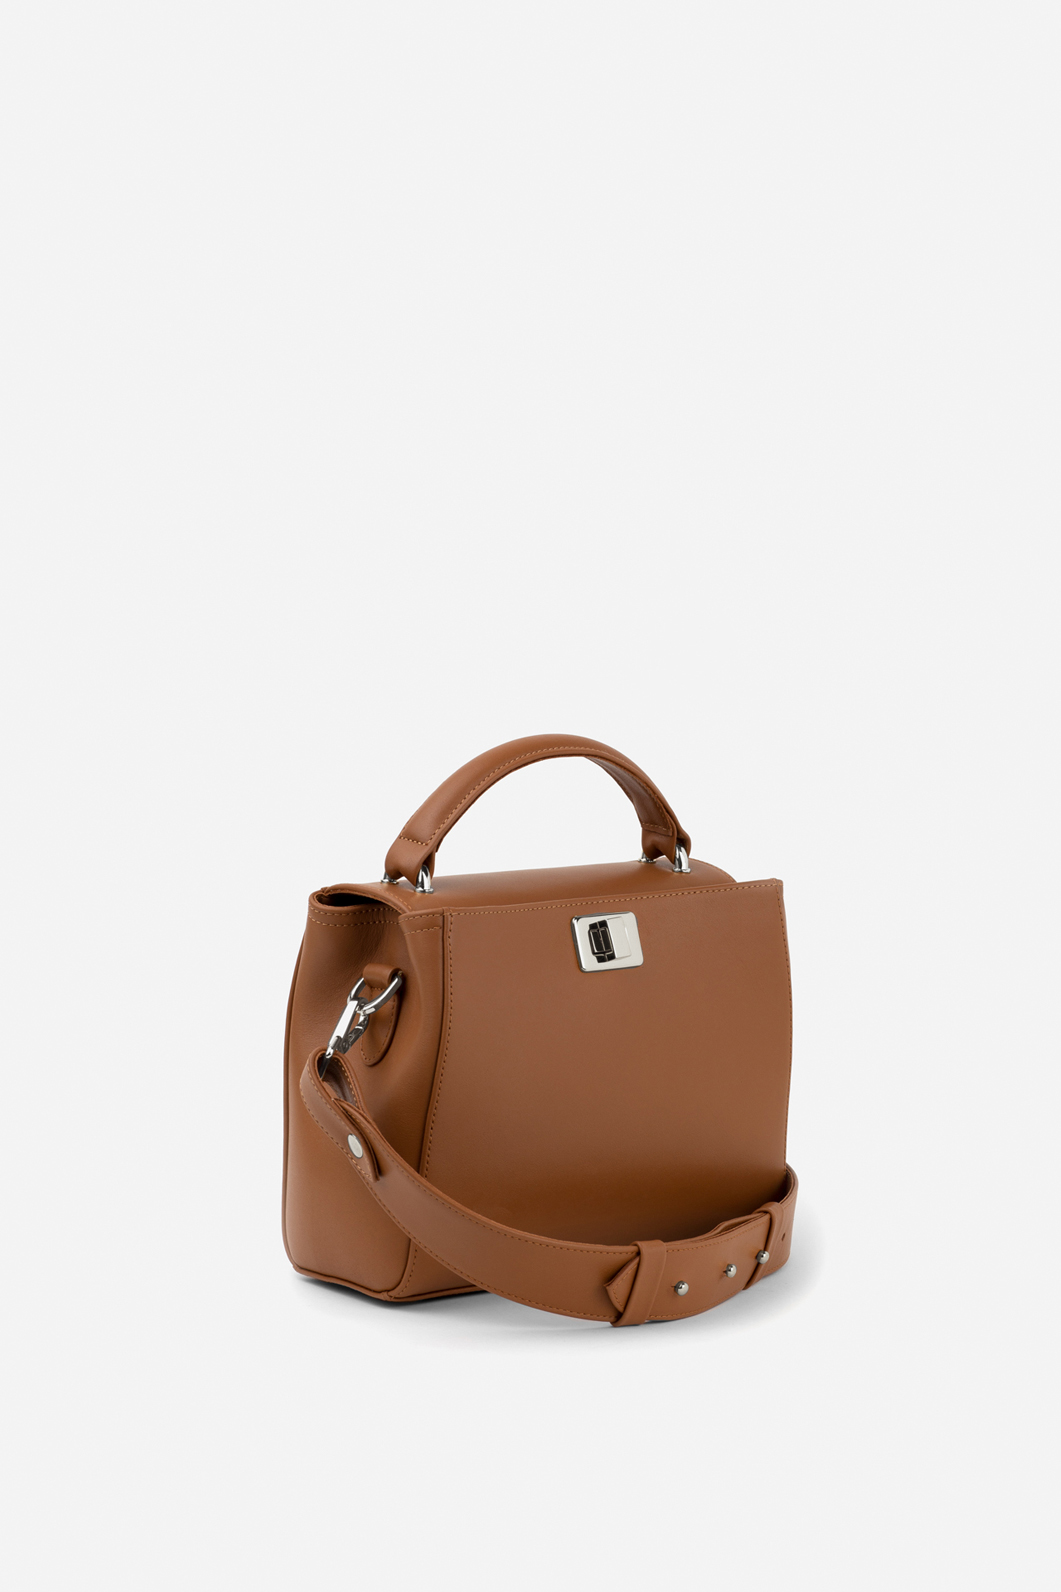 Erna mini
brown leather bag /silver/